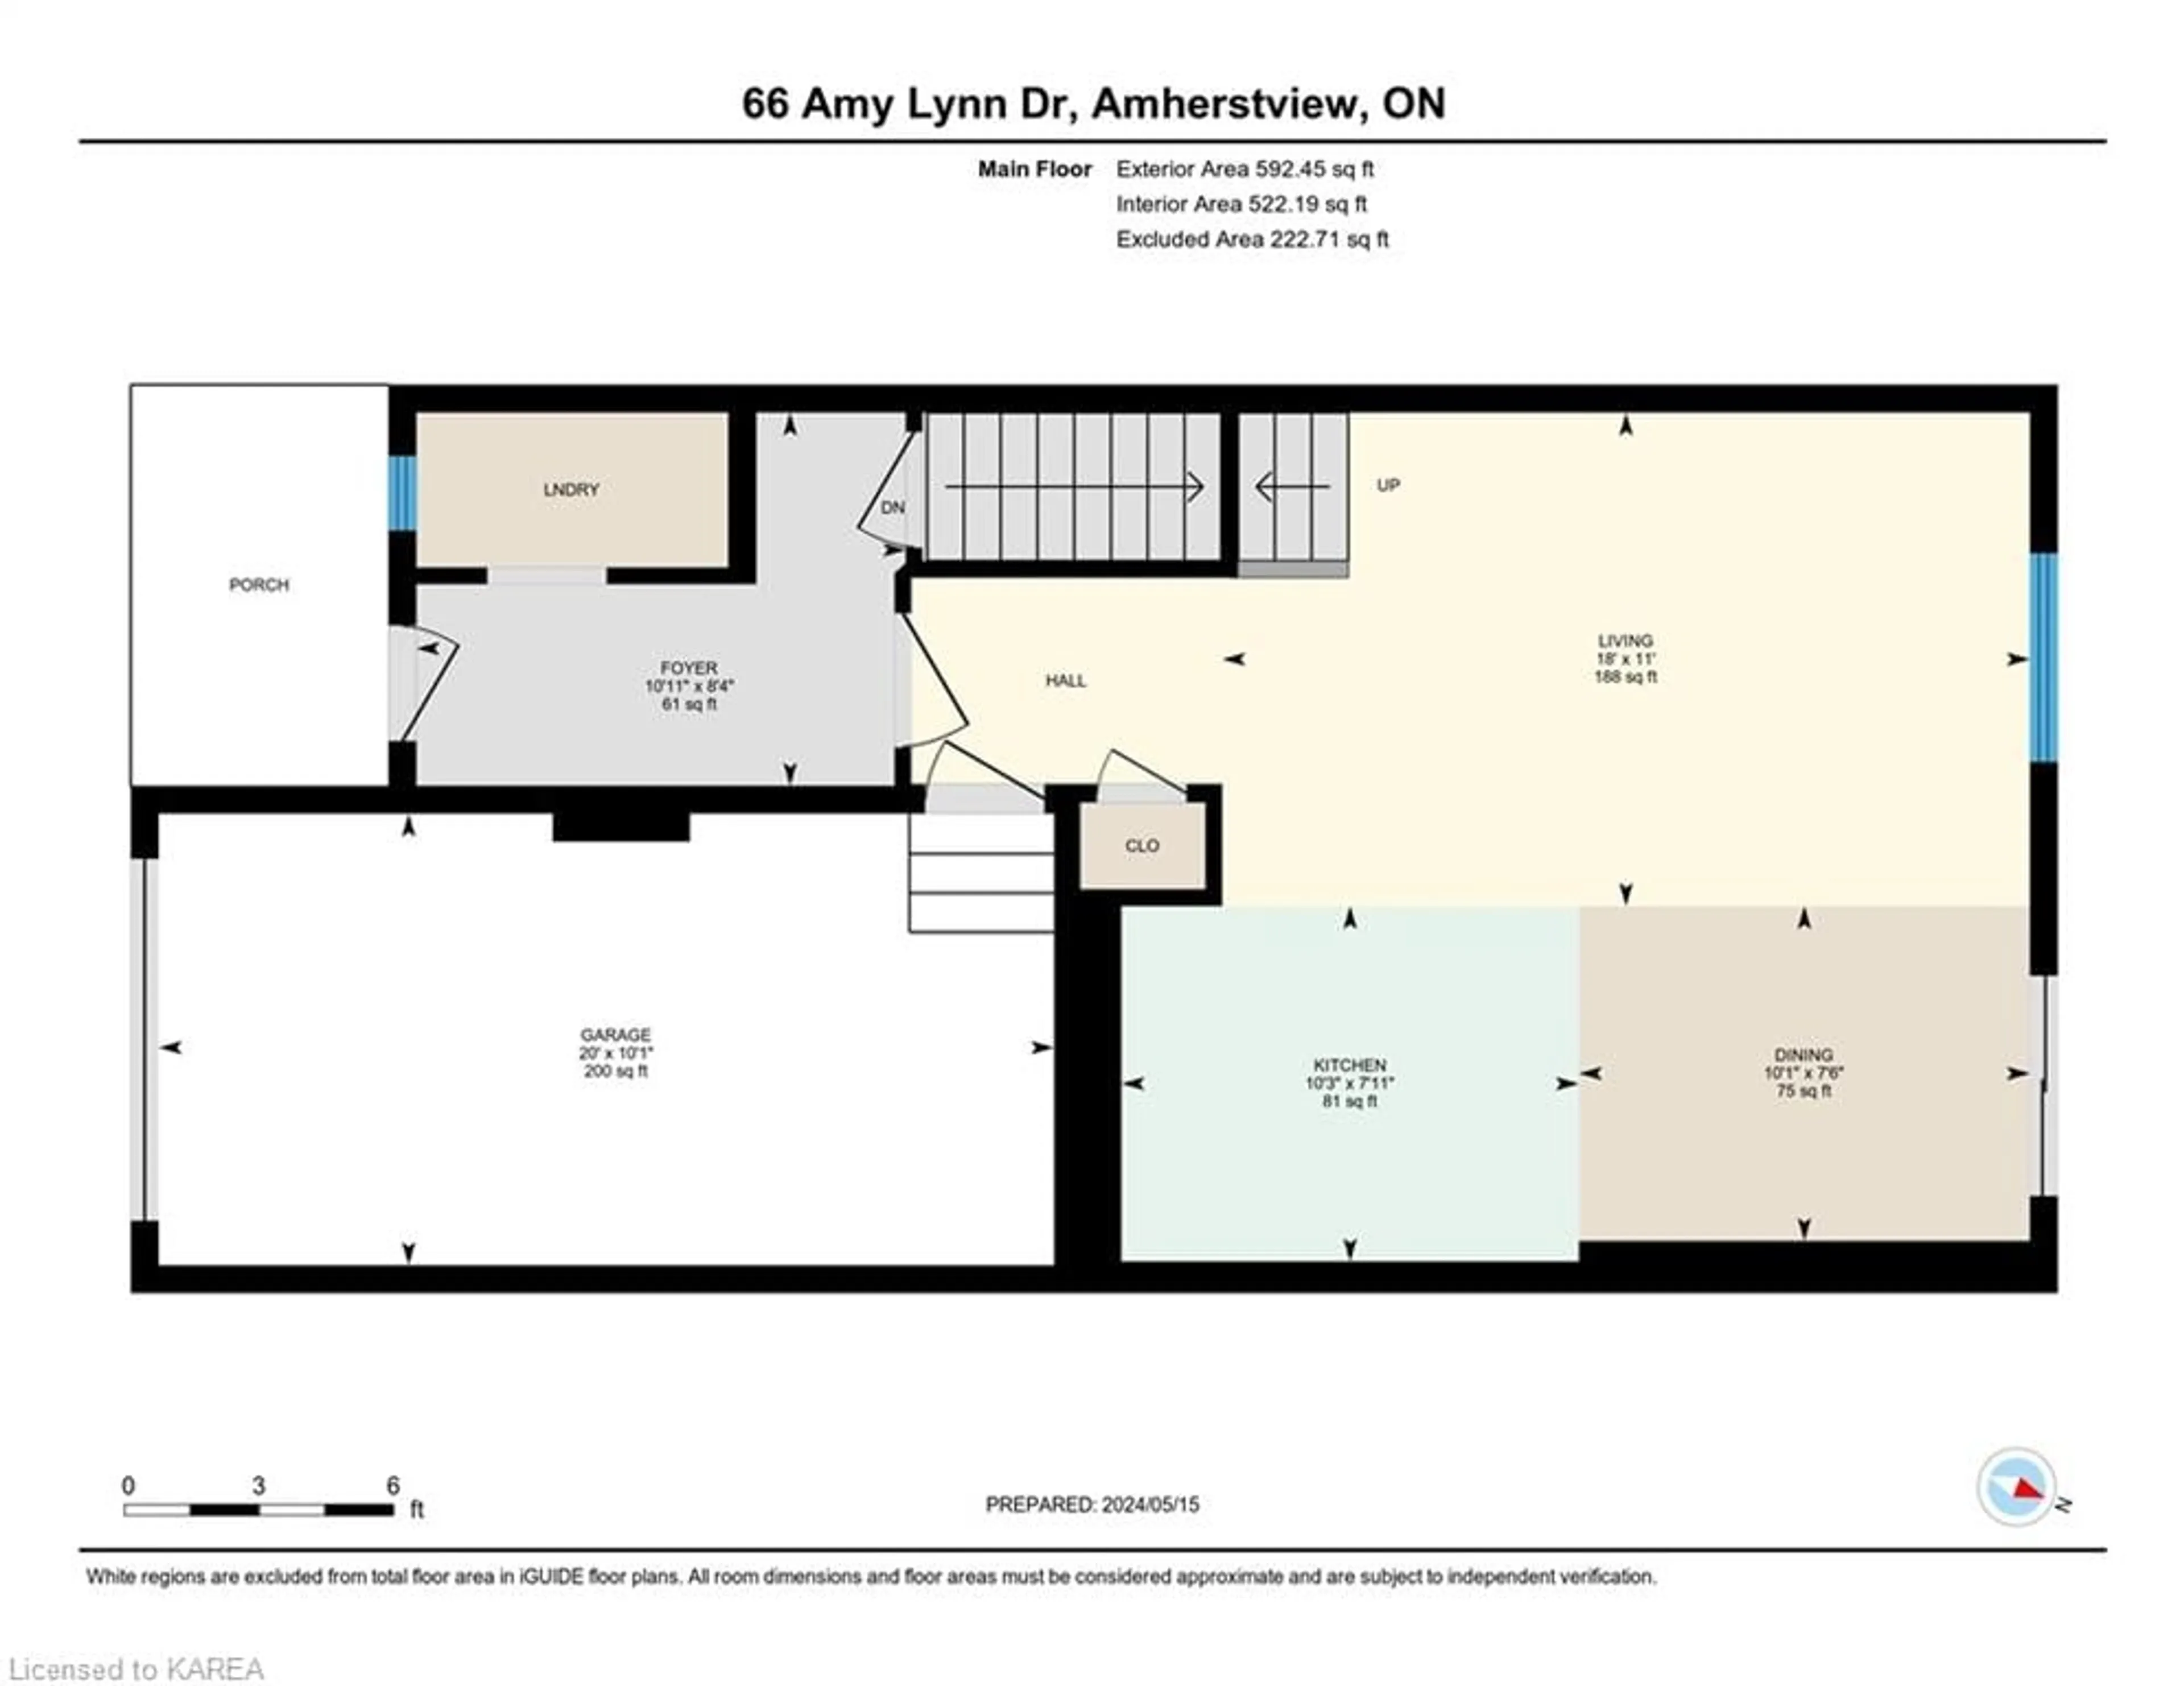 Floor plan for 66 Amy Lynn Dr, Amherstview Ontario K7N 0B2